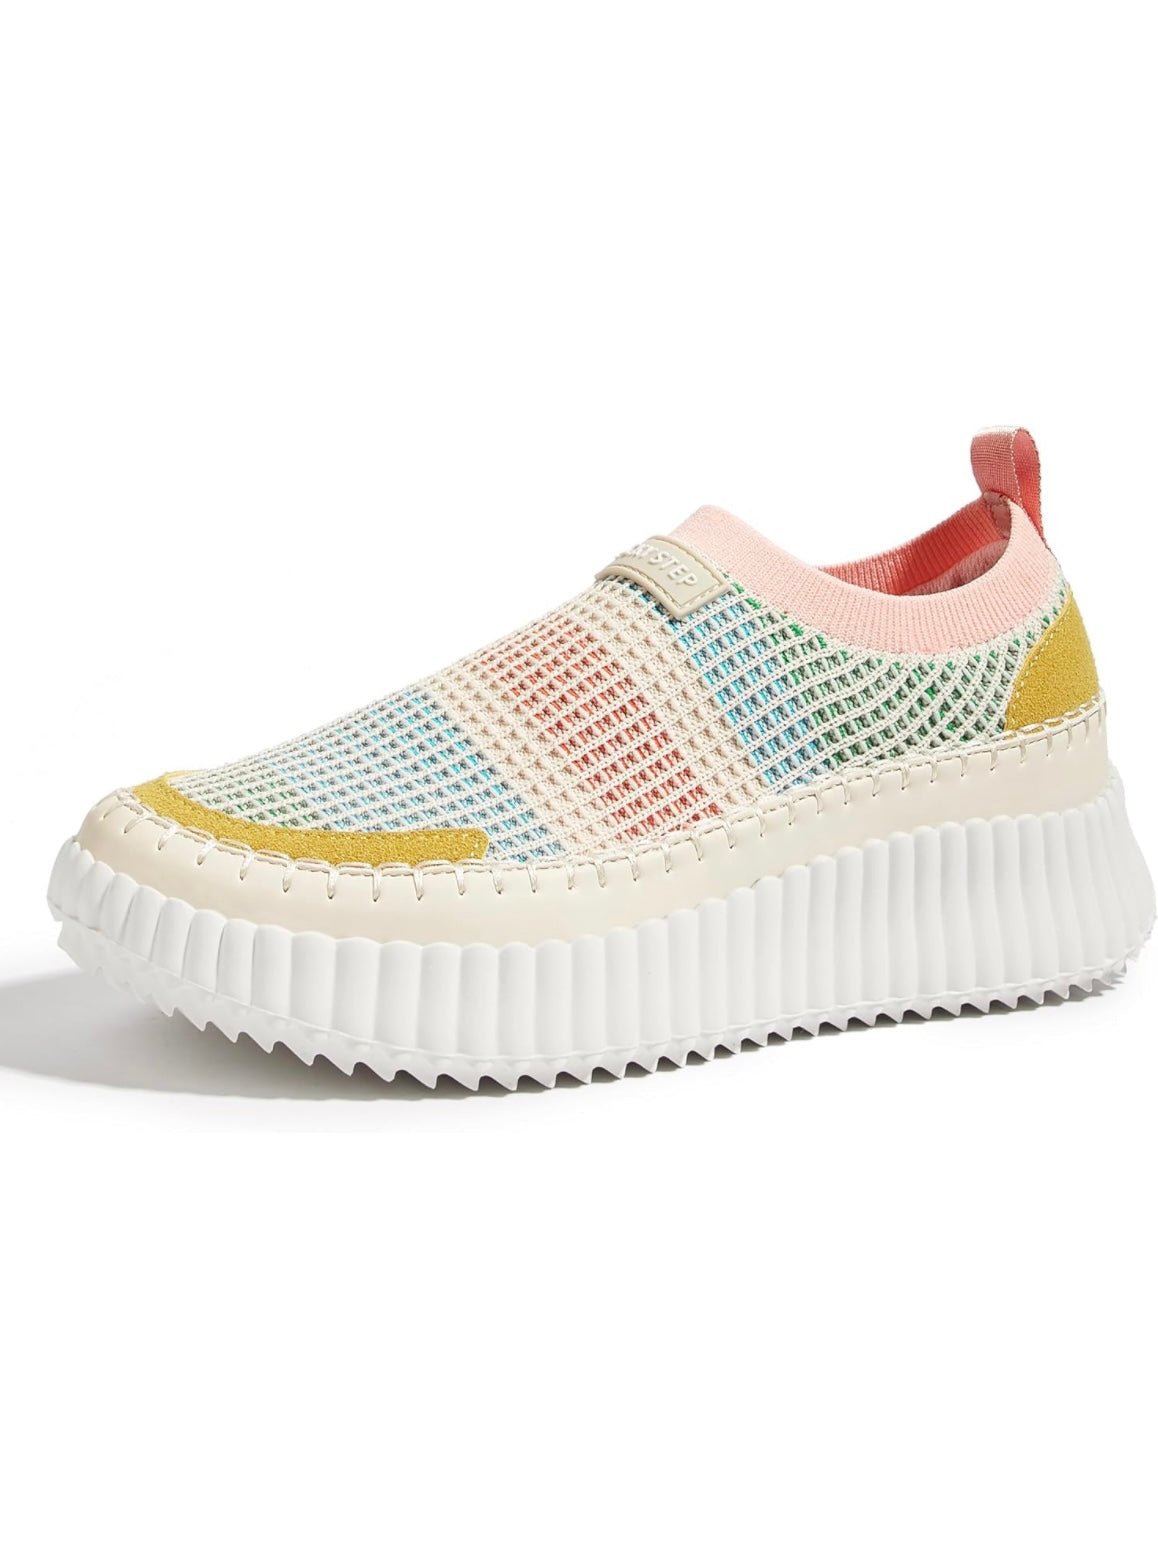 Multicolored light colors breathable fabric sneakers shoes - Wapas